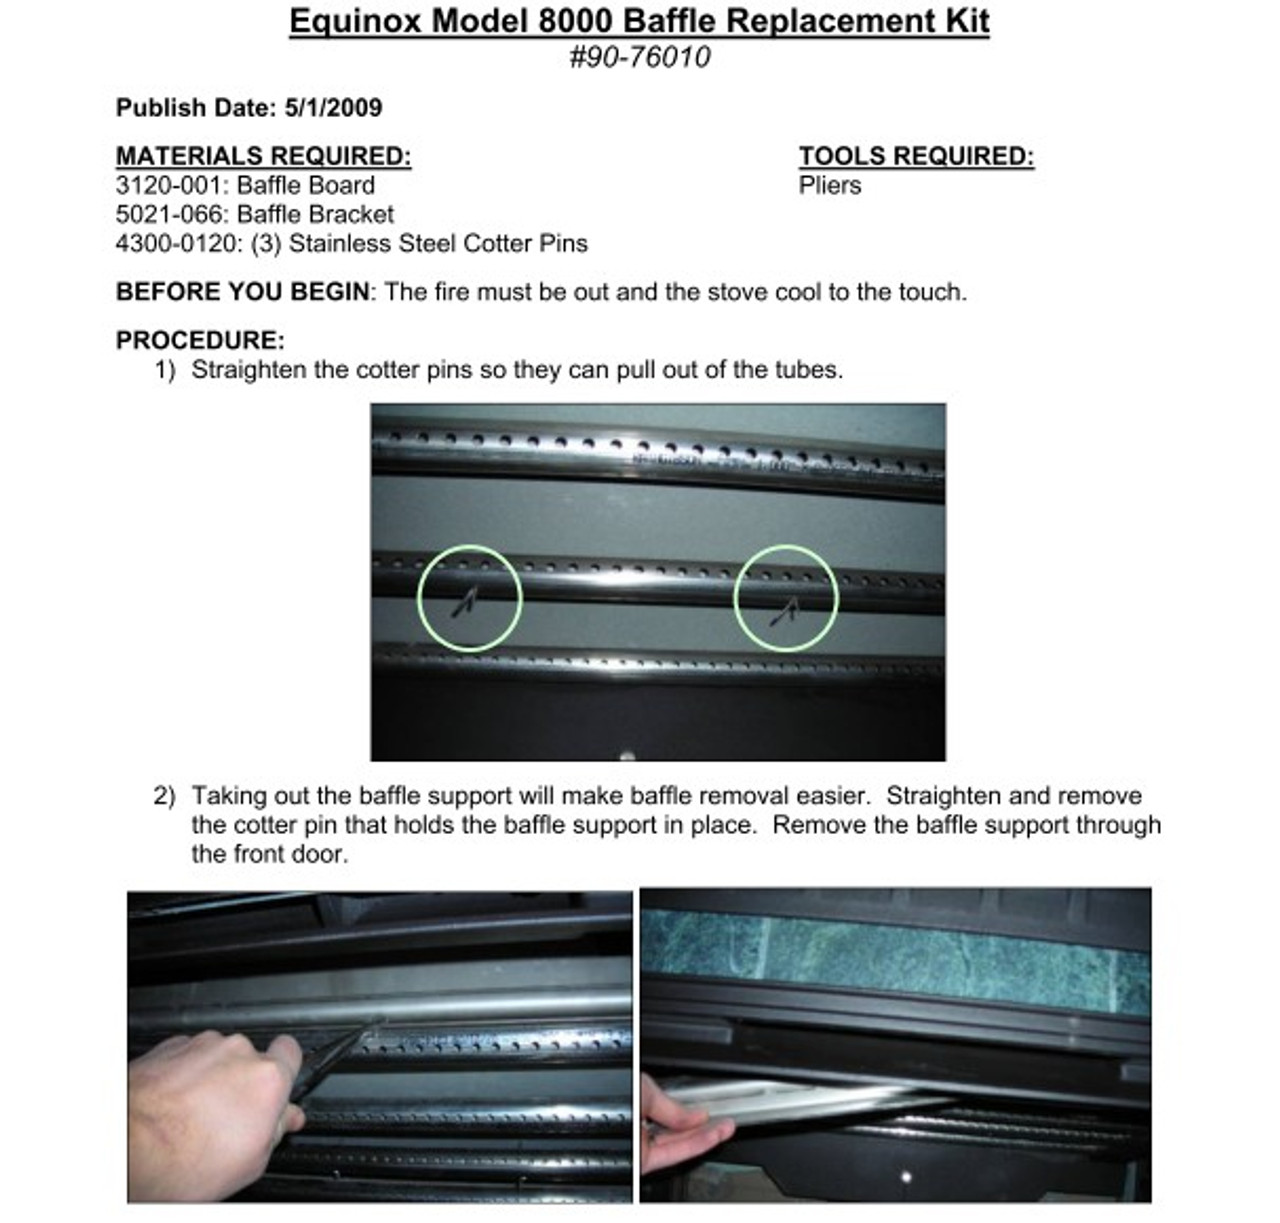 Equinox Replacement Baffle Kit #90-76010